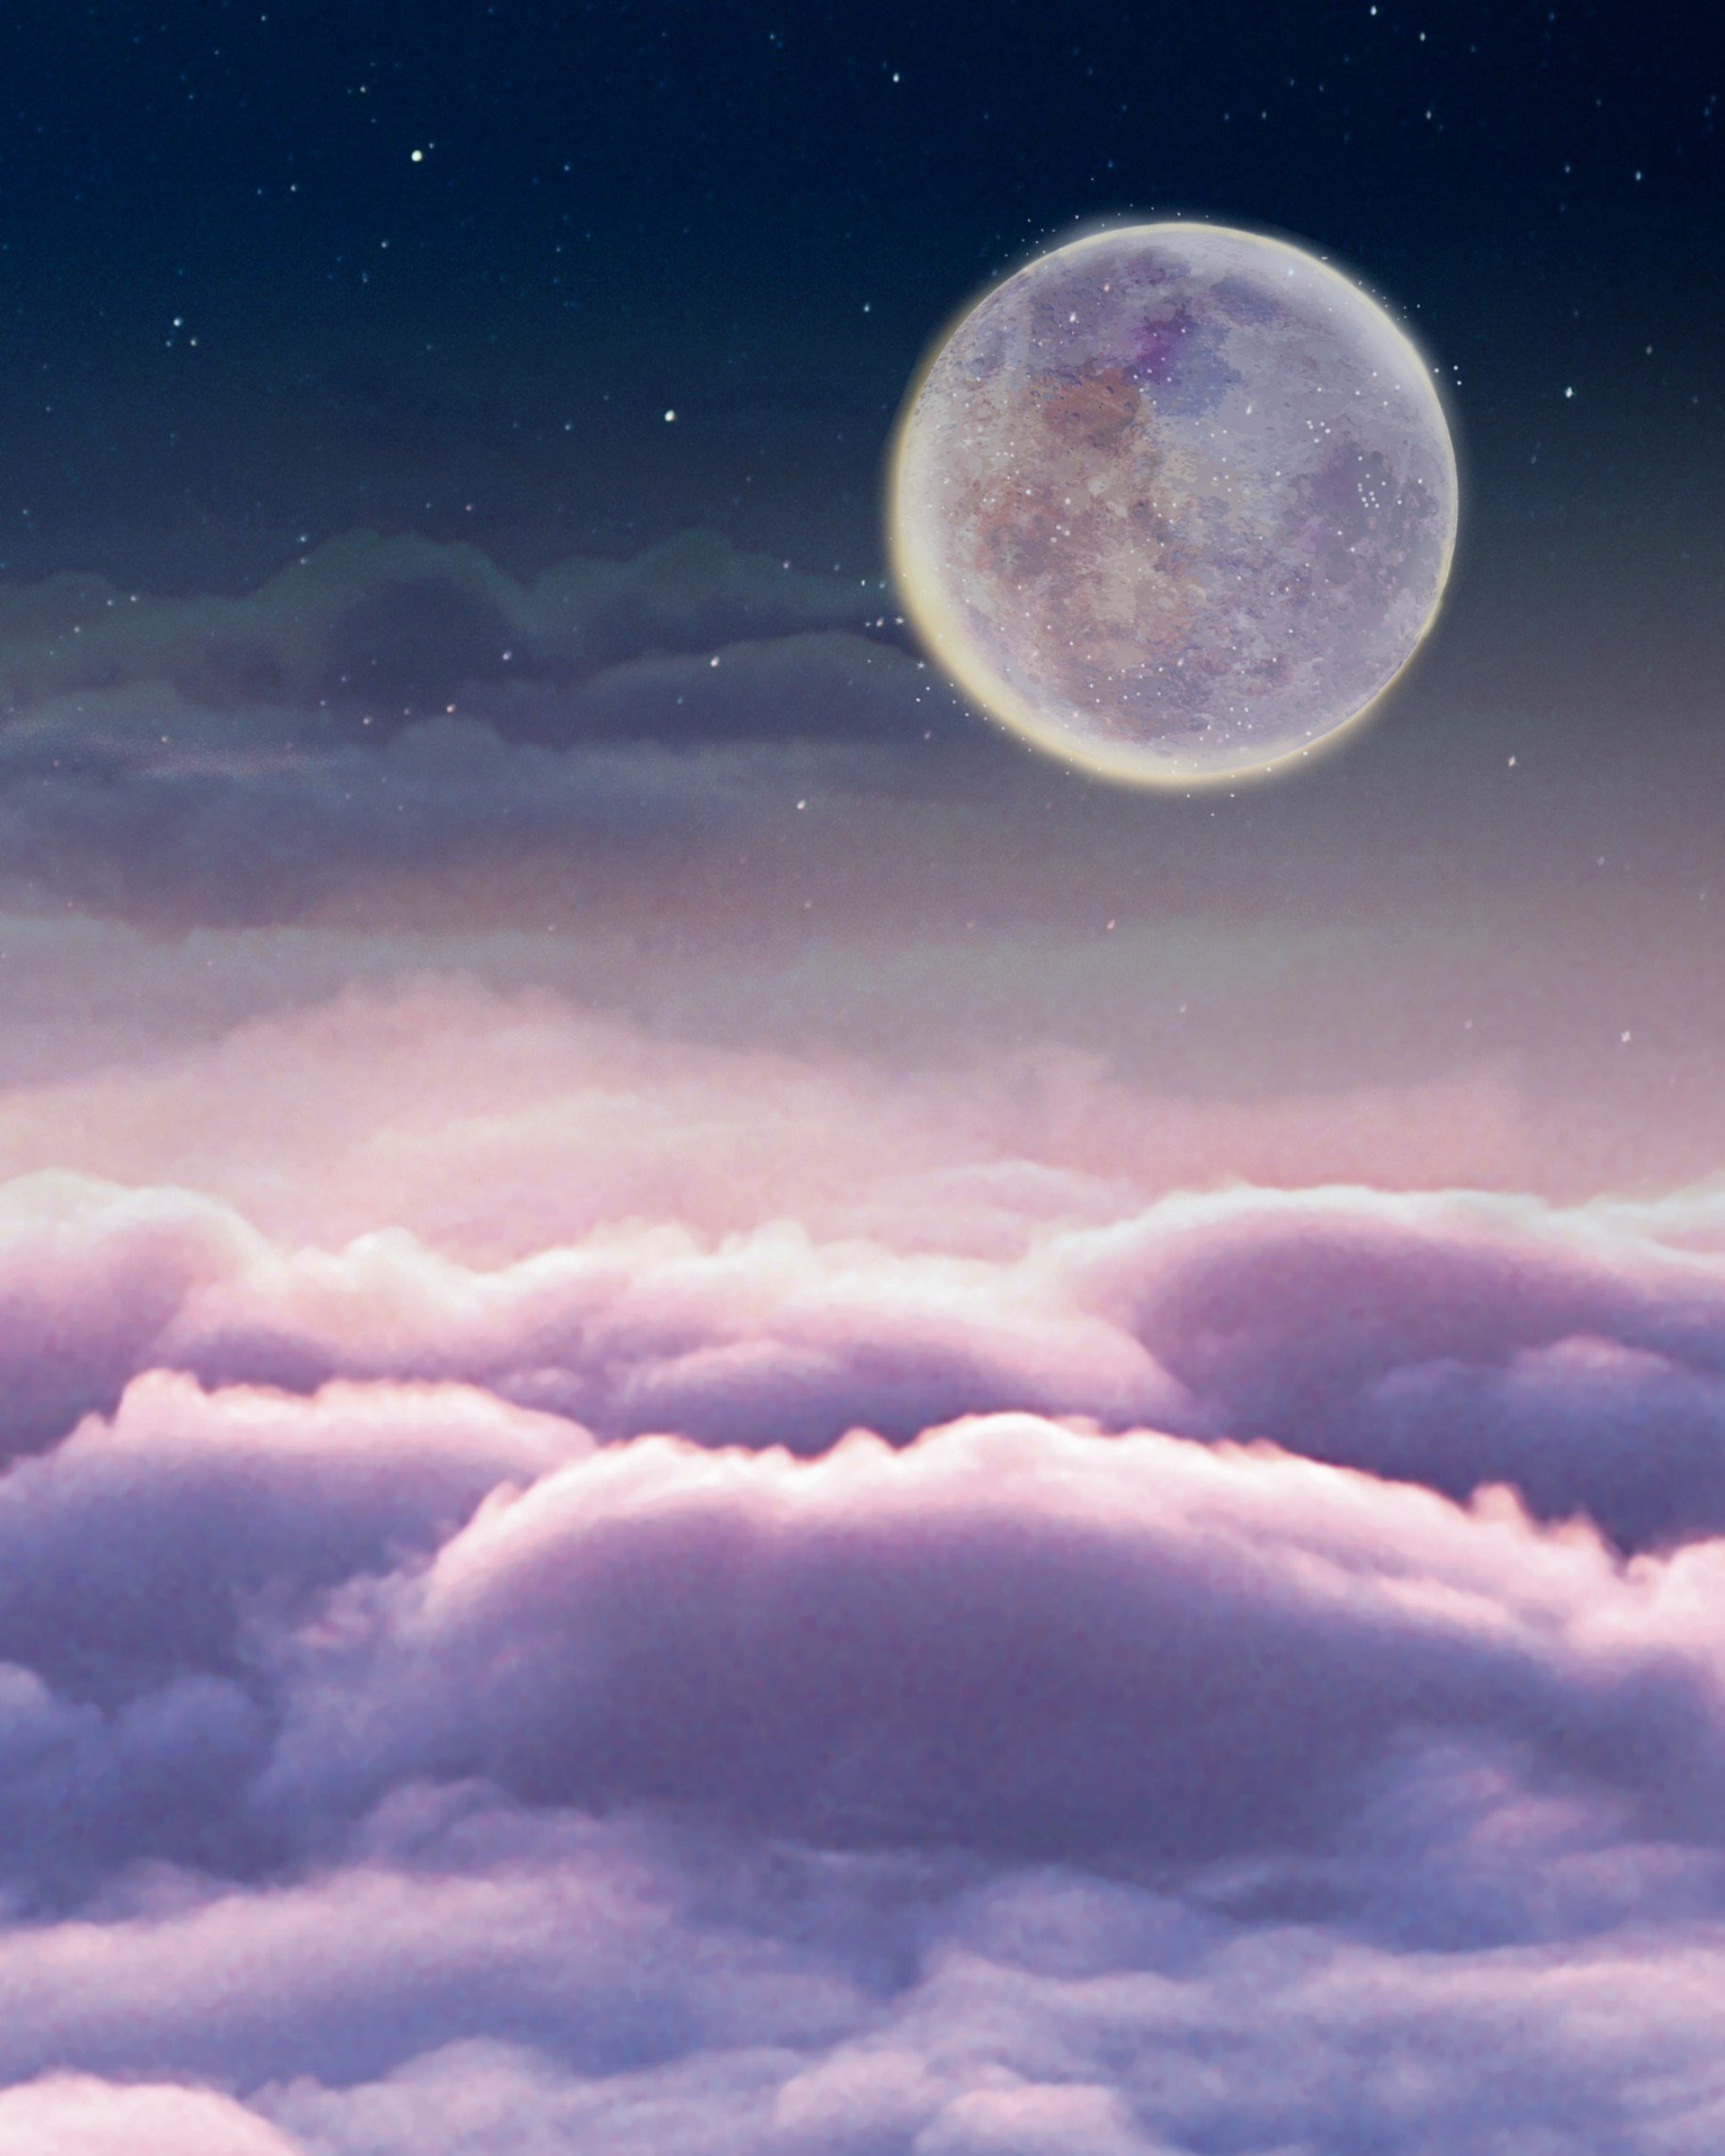 Луна в облаках. Ночное небо с облаками. Полнолуние в облаках. Звездное небо с облаками.